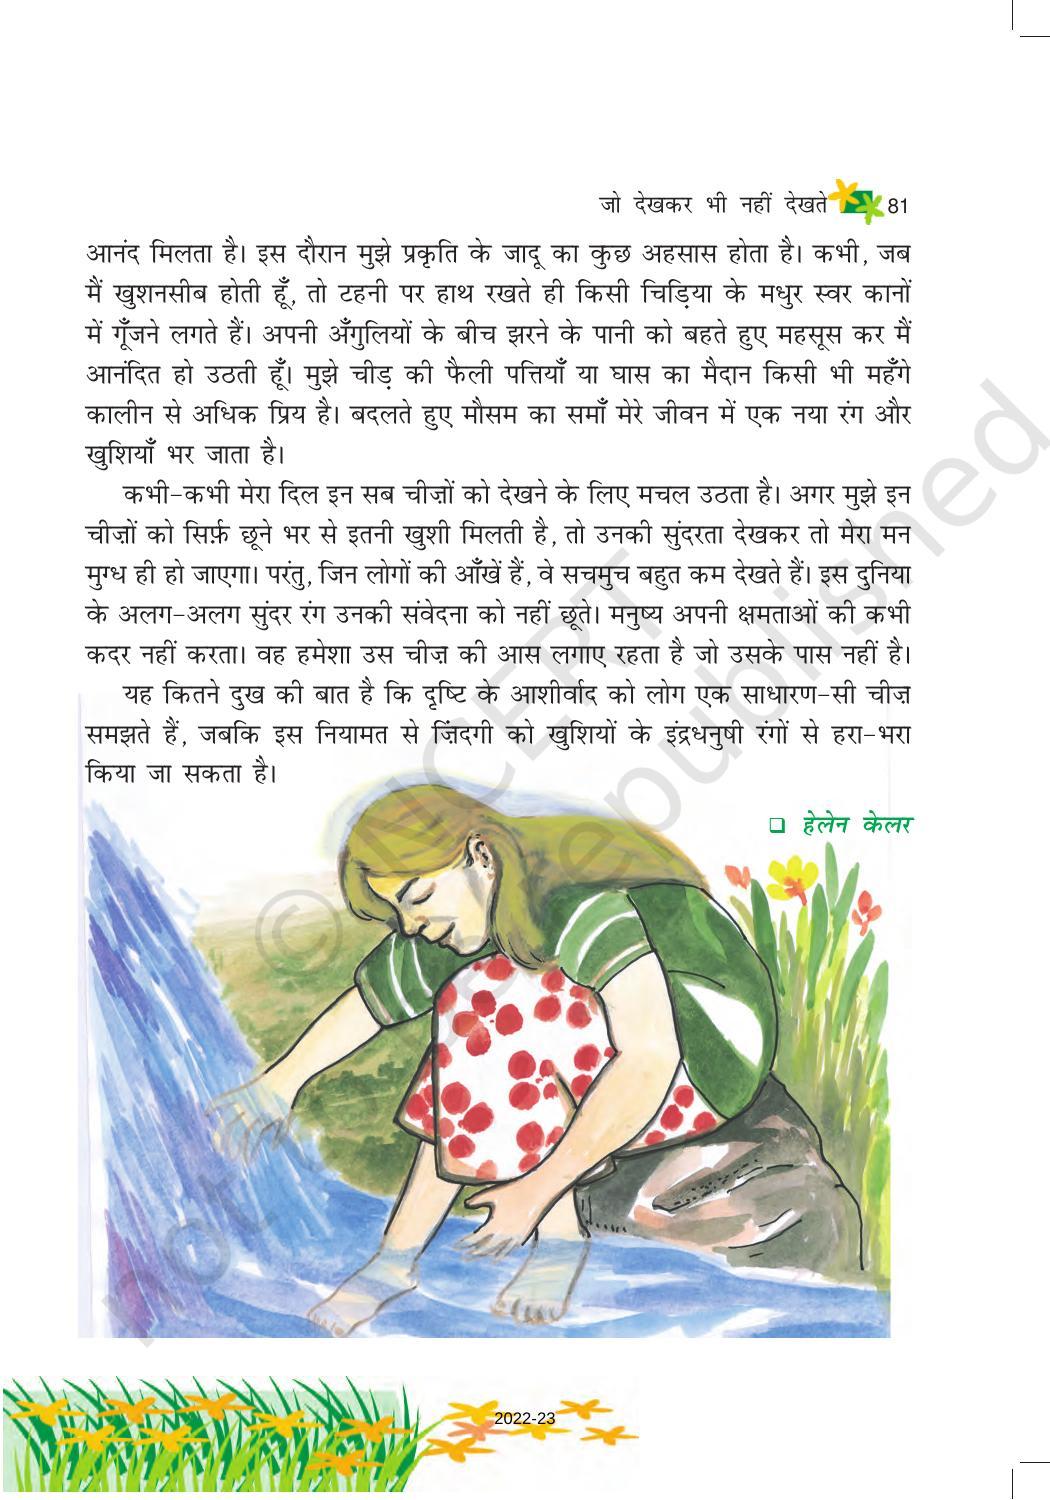 NCERT Book for Class 6 Hindi(Vasant Bhag 1) : Chapter 11-जो देखकर भी नहीं देखते - Page 2